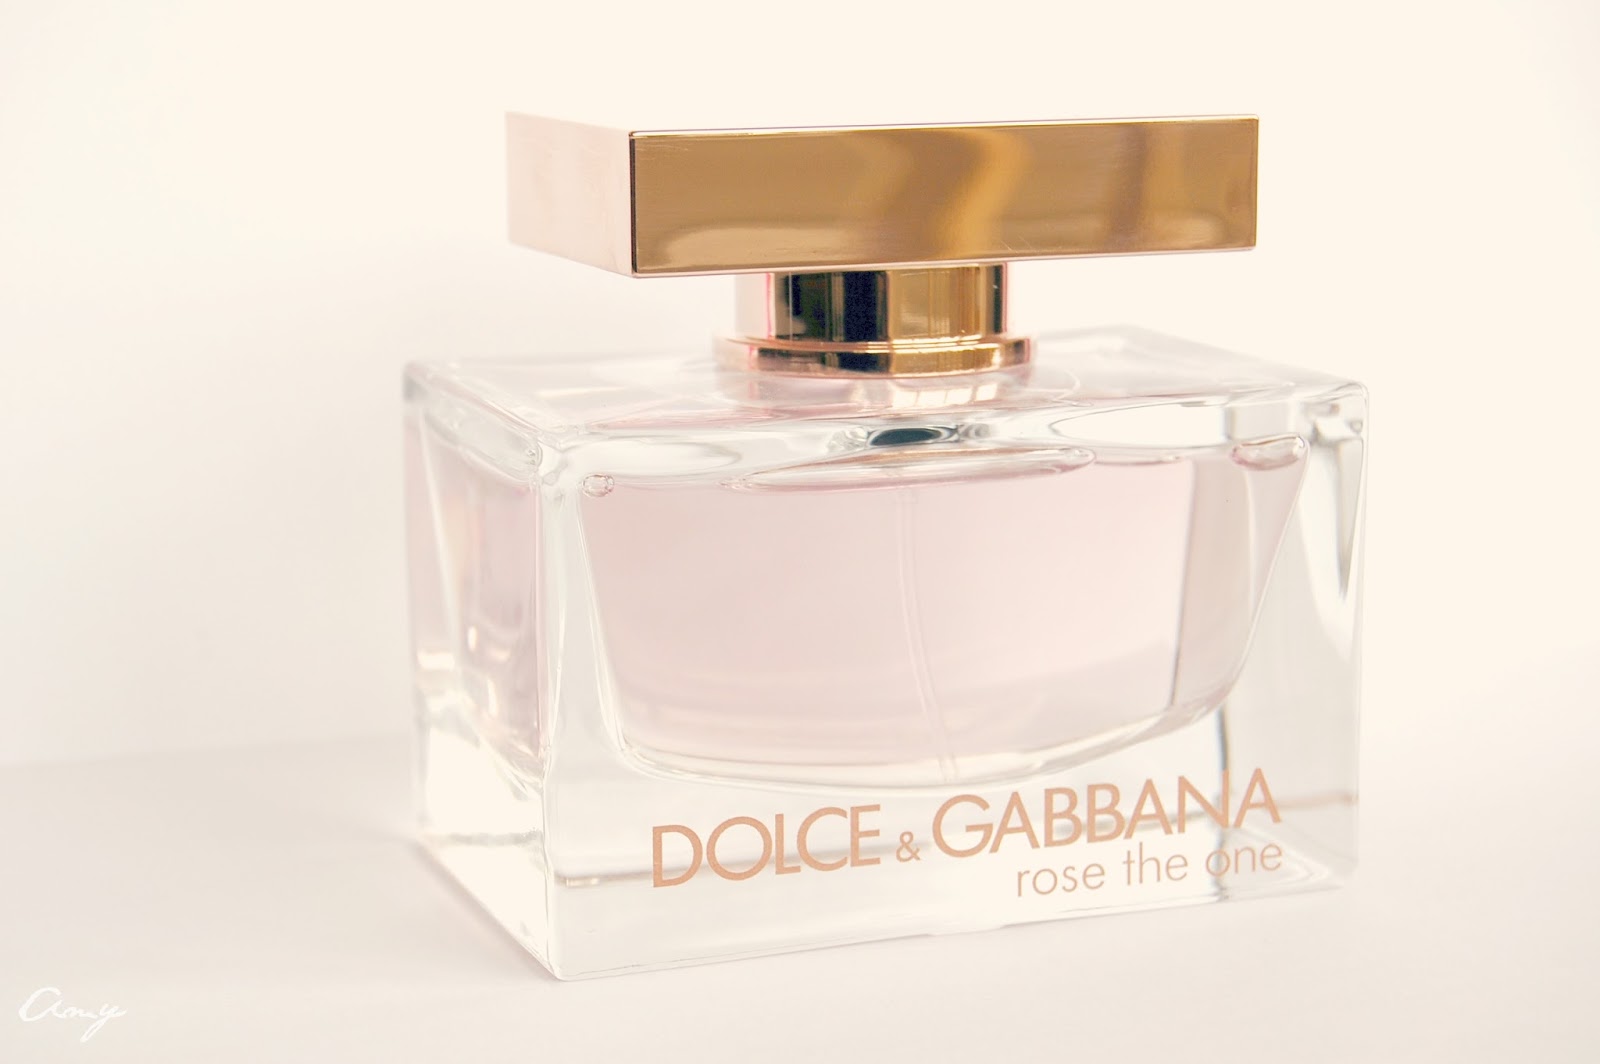 Дольче габбана розовые духи. Dolce Gabbana Rose the one. Dolce Gabbana Rose. Дольче Габбана Роуз.